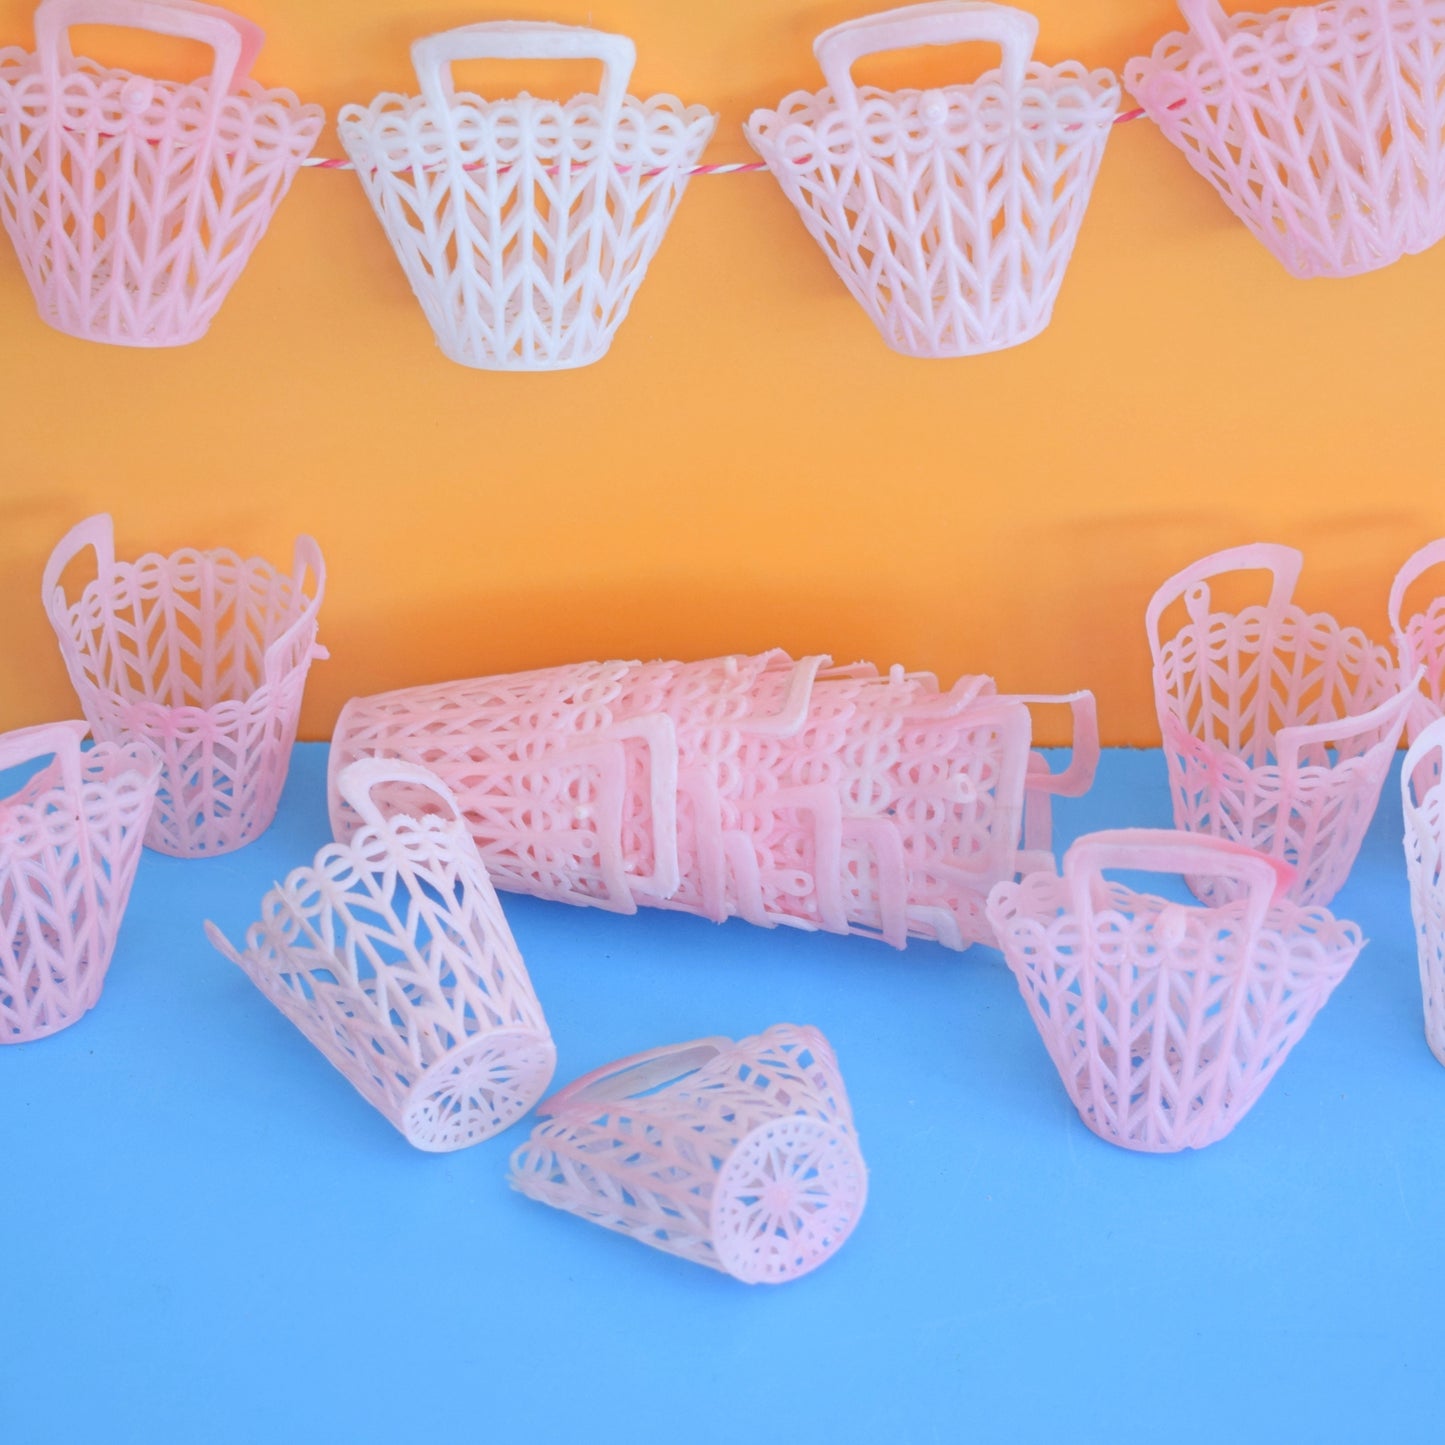 Vintage 1960s Plastic Basket Alternative Advent Calendar - Pink